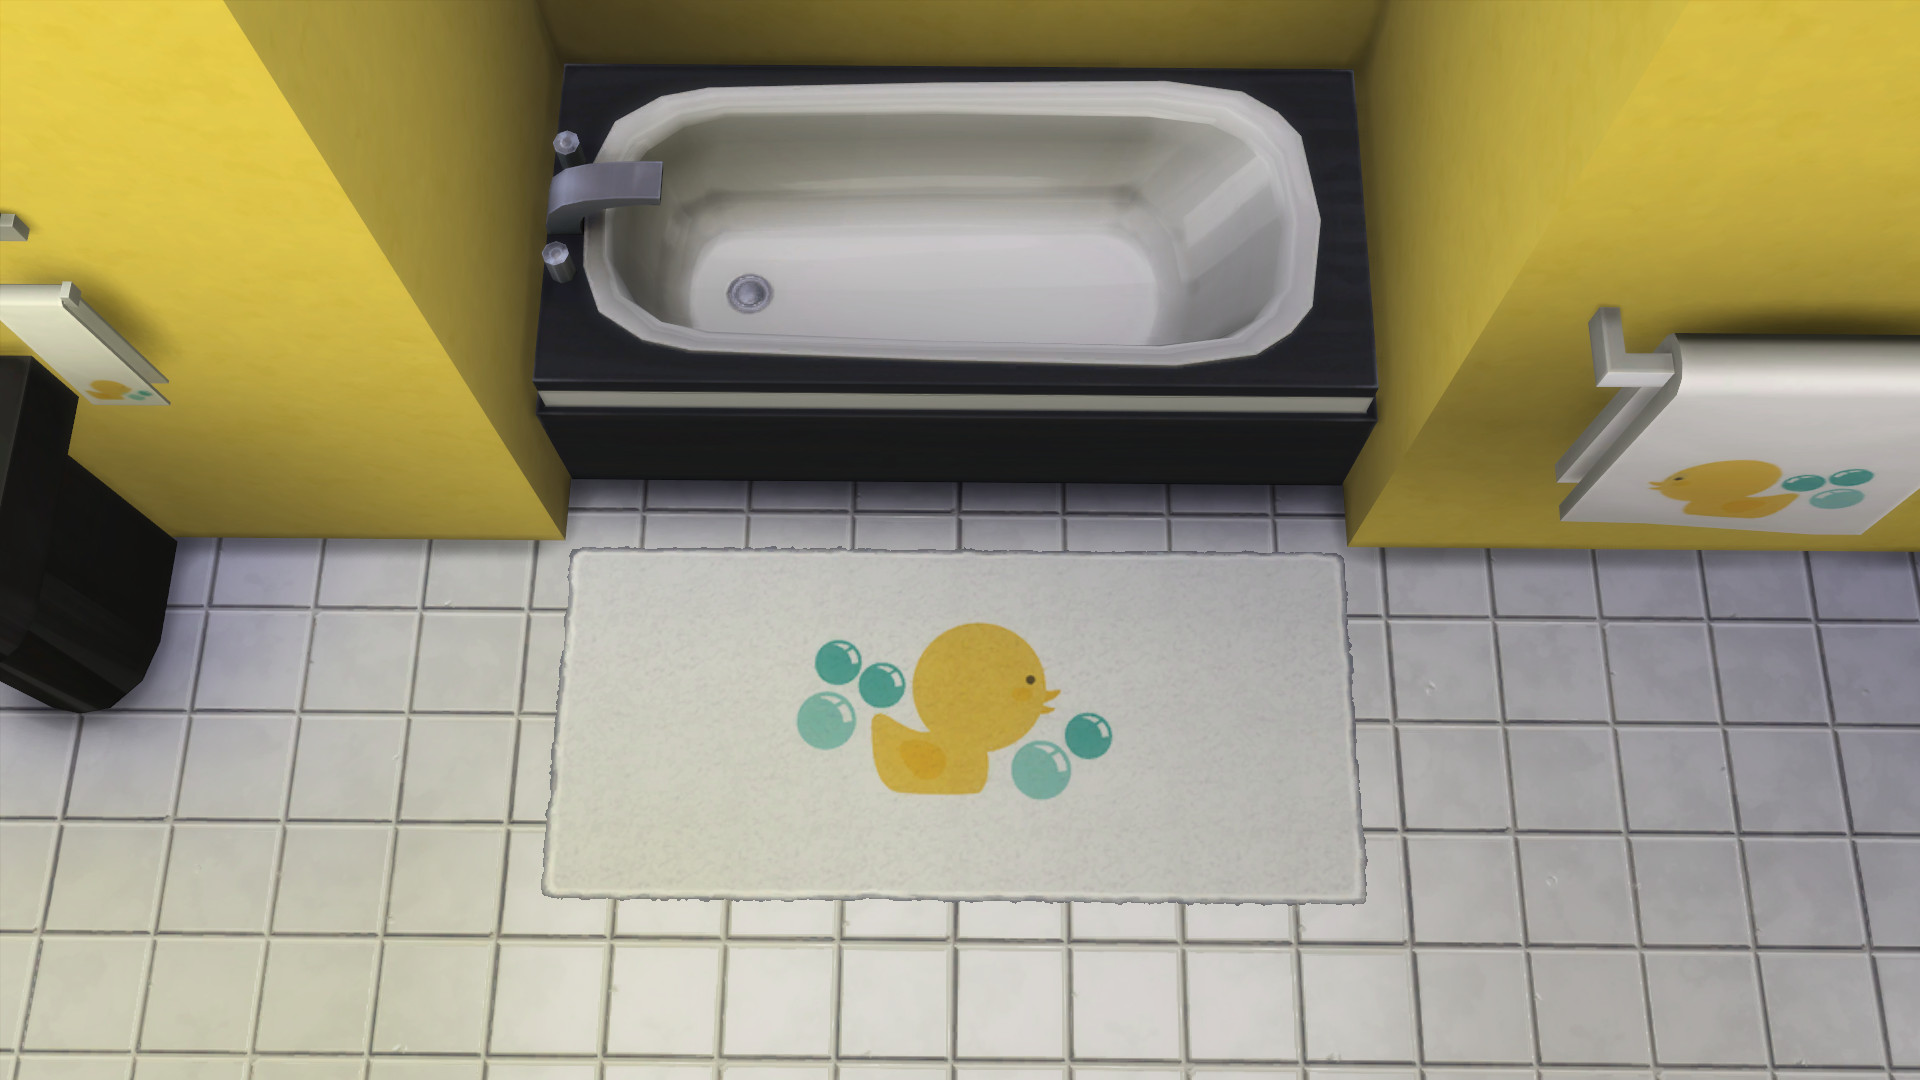 Rubber Ducky Bathroom Decor
 Rubber Ducky Bathroom Decor — The Sims Forums